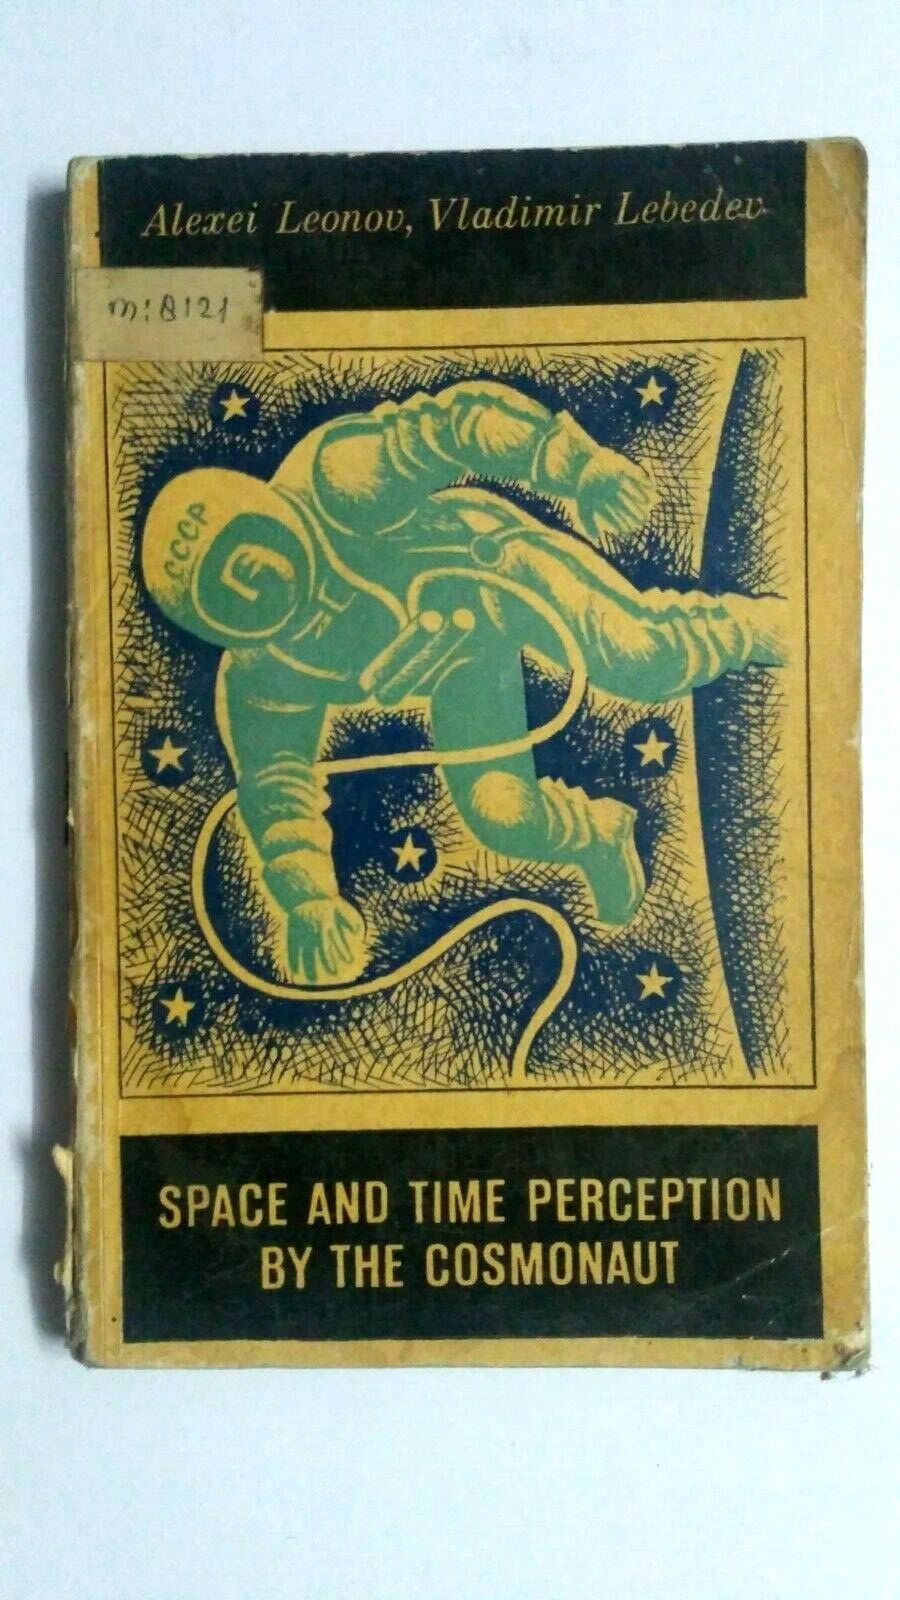 INDIA  SPACE AND TIME PERCEPTION BY THE COSMONAUT ALEXEI LEONOV  1971 MIR PUB